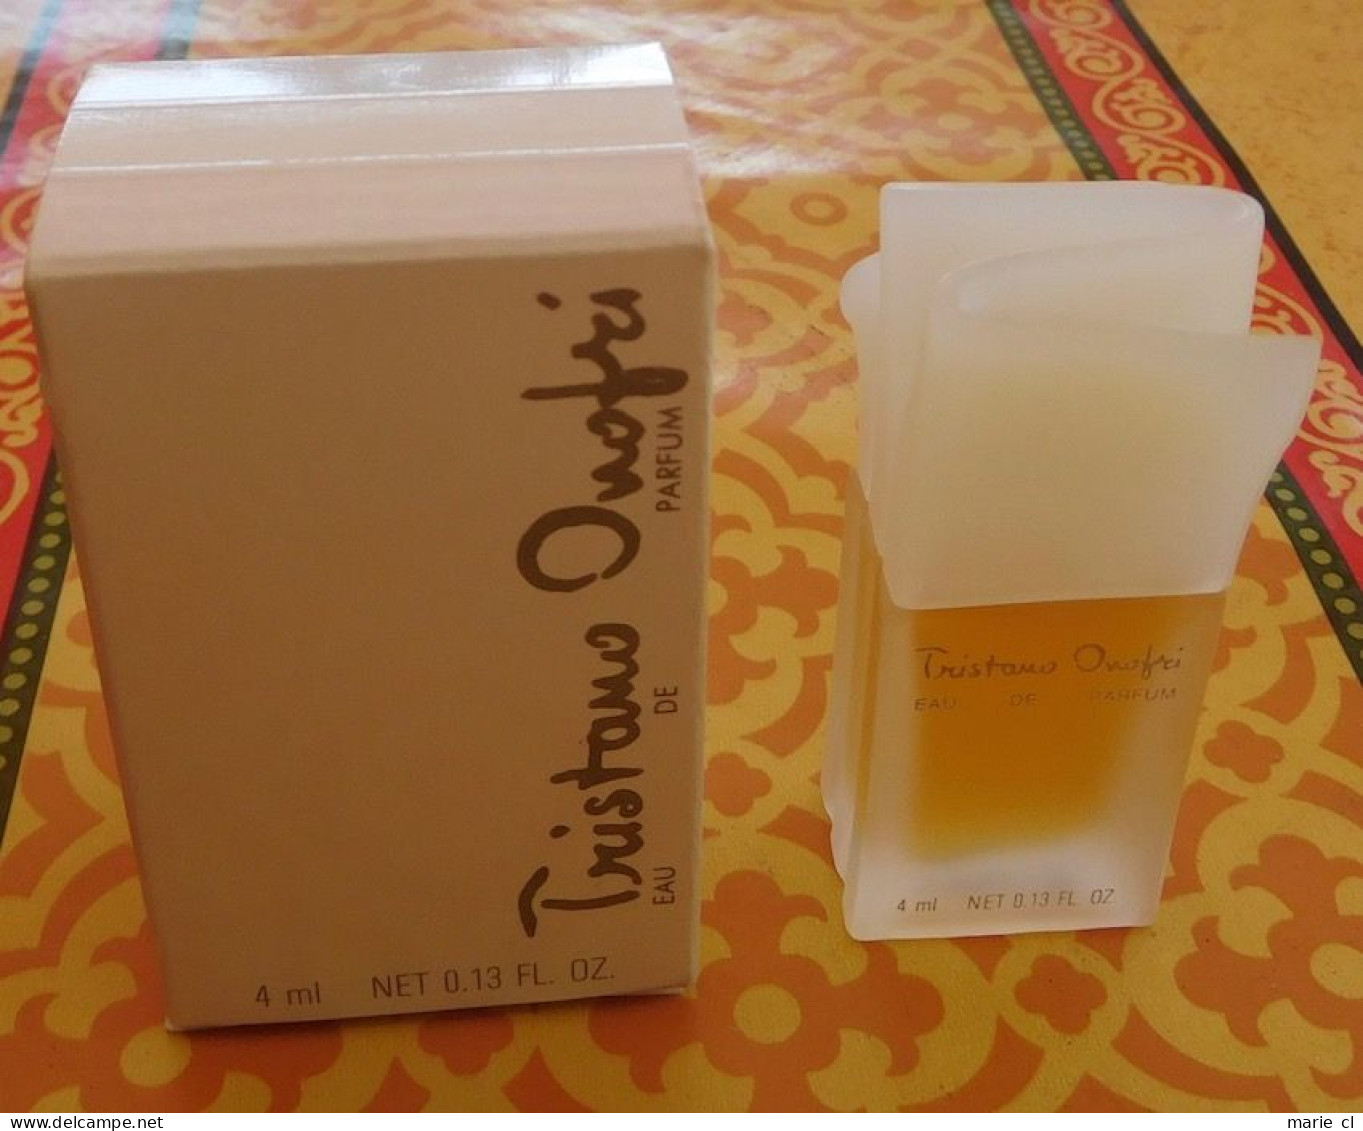 Miniature Parfum  TRISTANO ONOFRI - Miniatures Femmes (avec Boite)